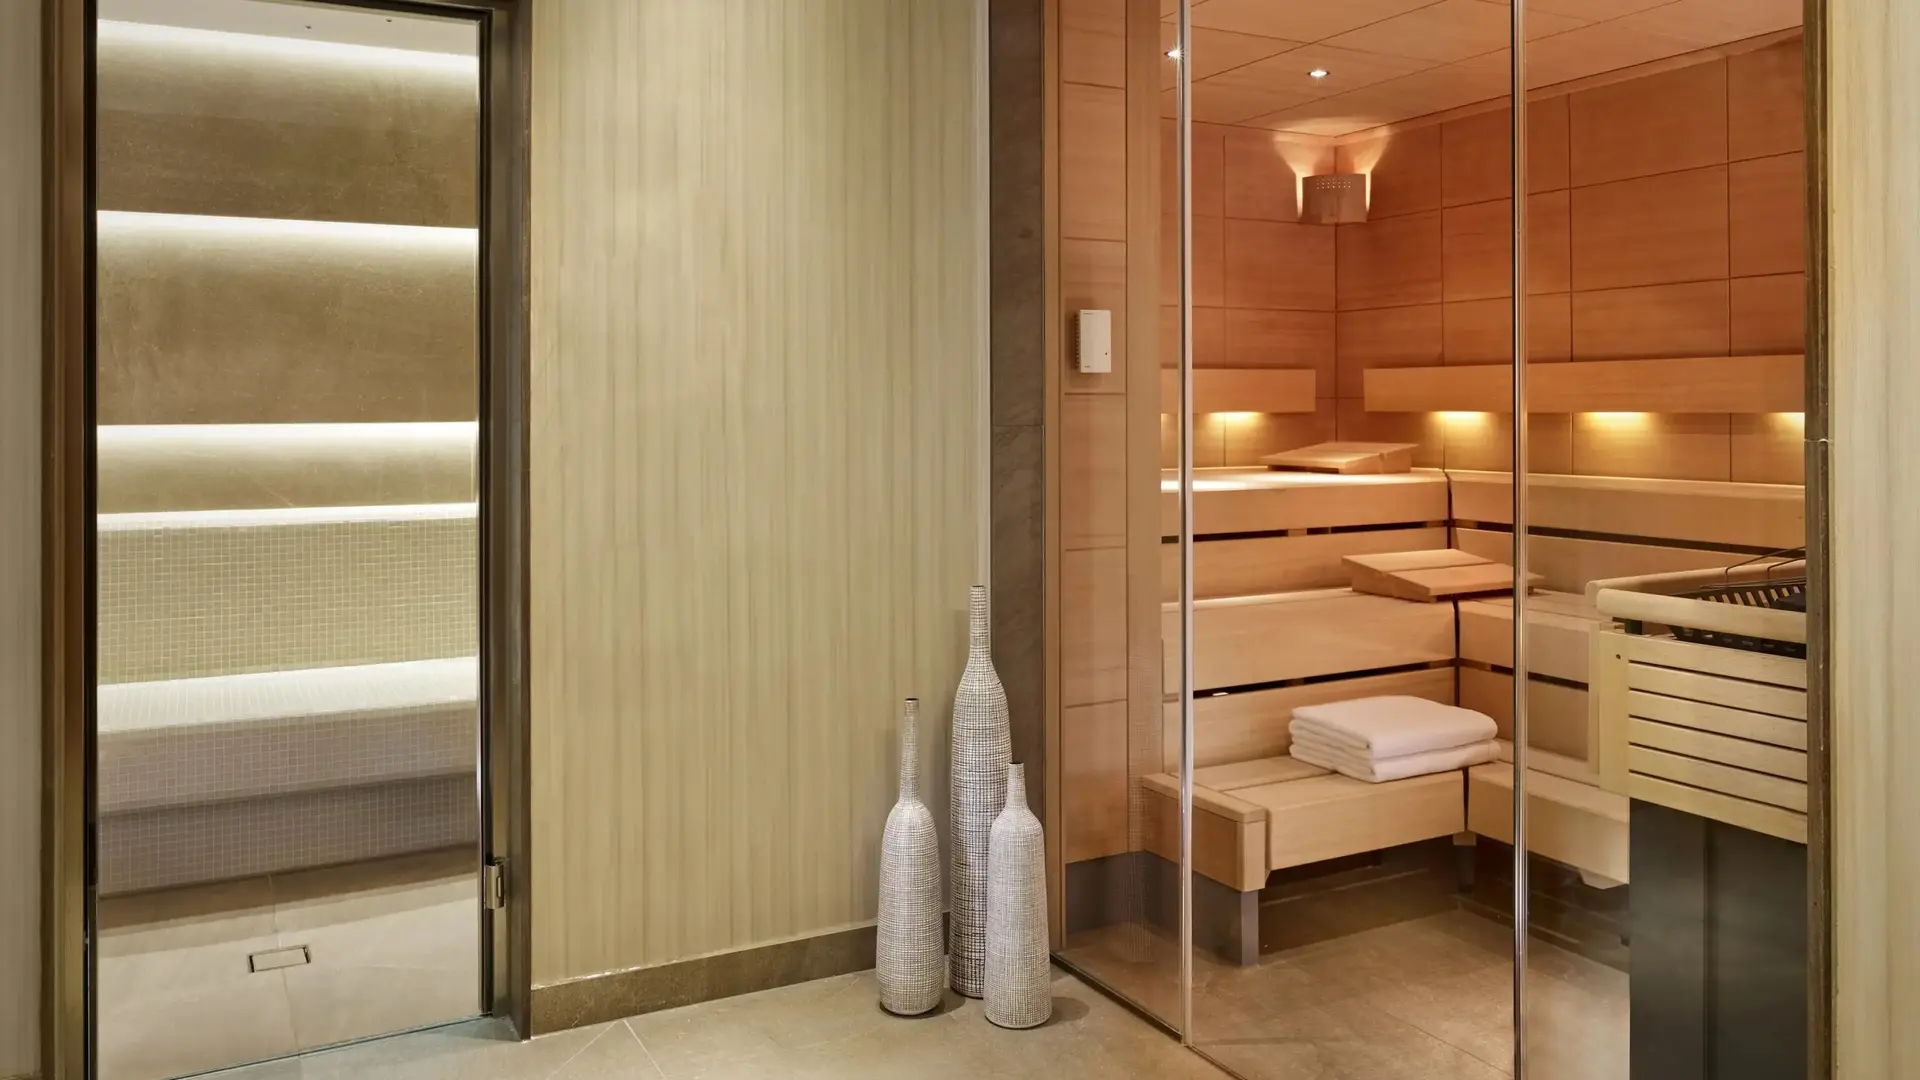 Hotel review Service & Facilities' - The Ritz-Carlton, Berlin - 3